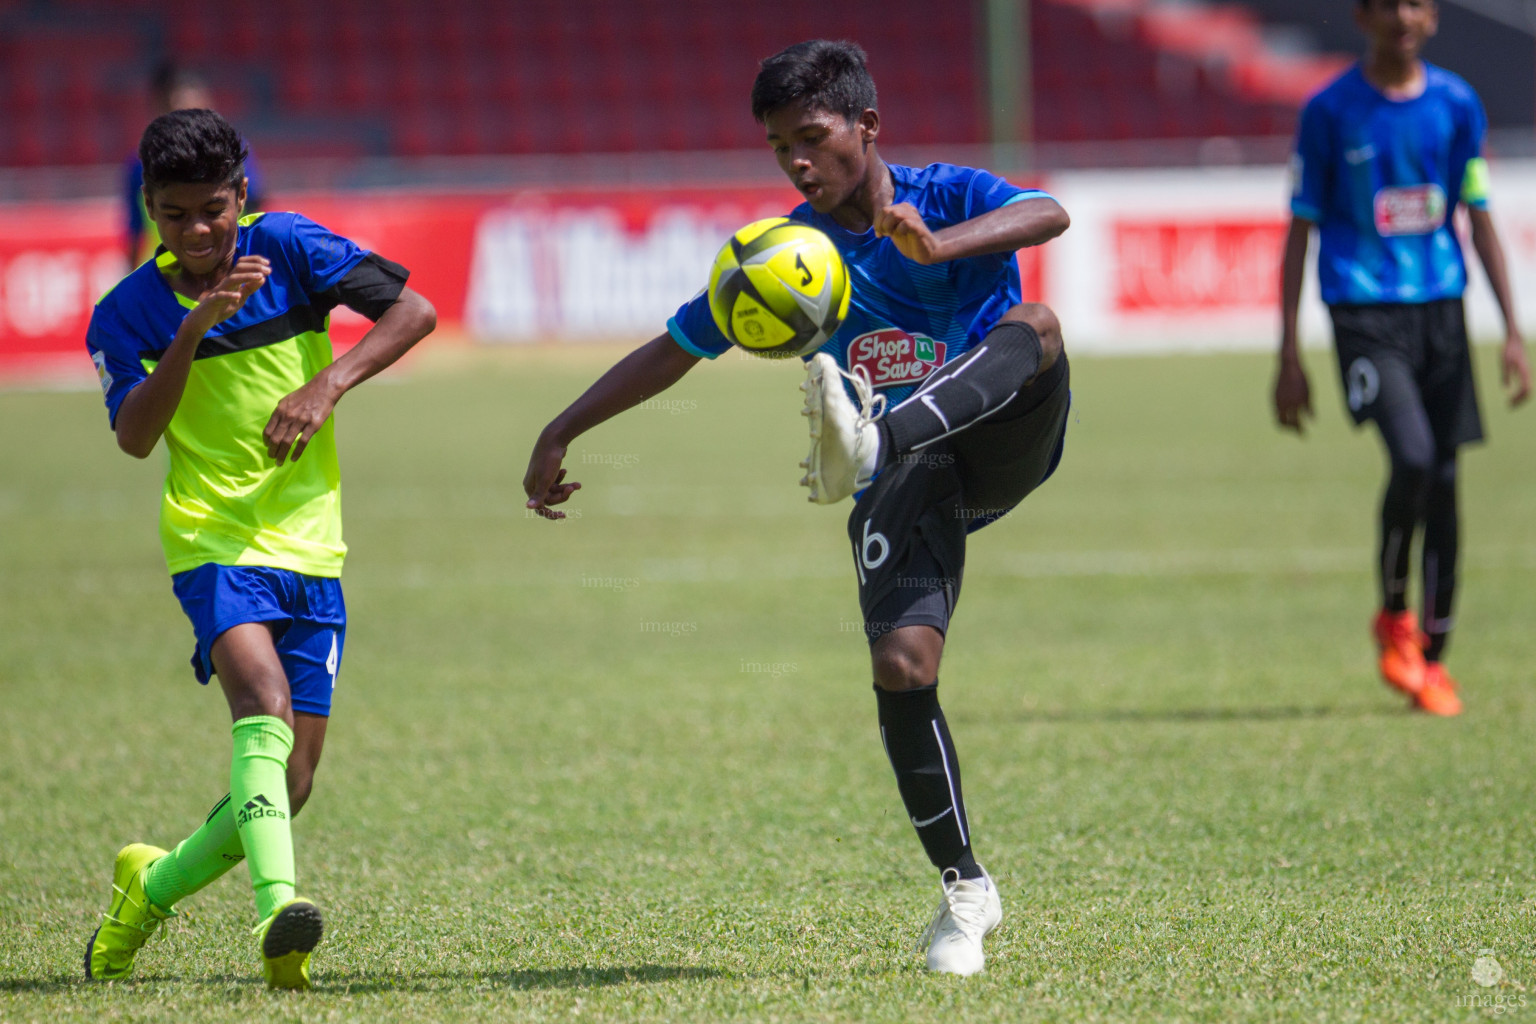 Dhiraagu Under 15 Inter-School Football Tournament 2019 - Huravi vs Jamaludhdhin in Male', Maldives, 25rth 2019 (Images.mv Photo/Suadh Abdul Sattar)